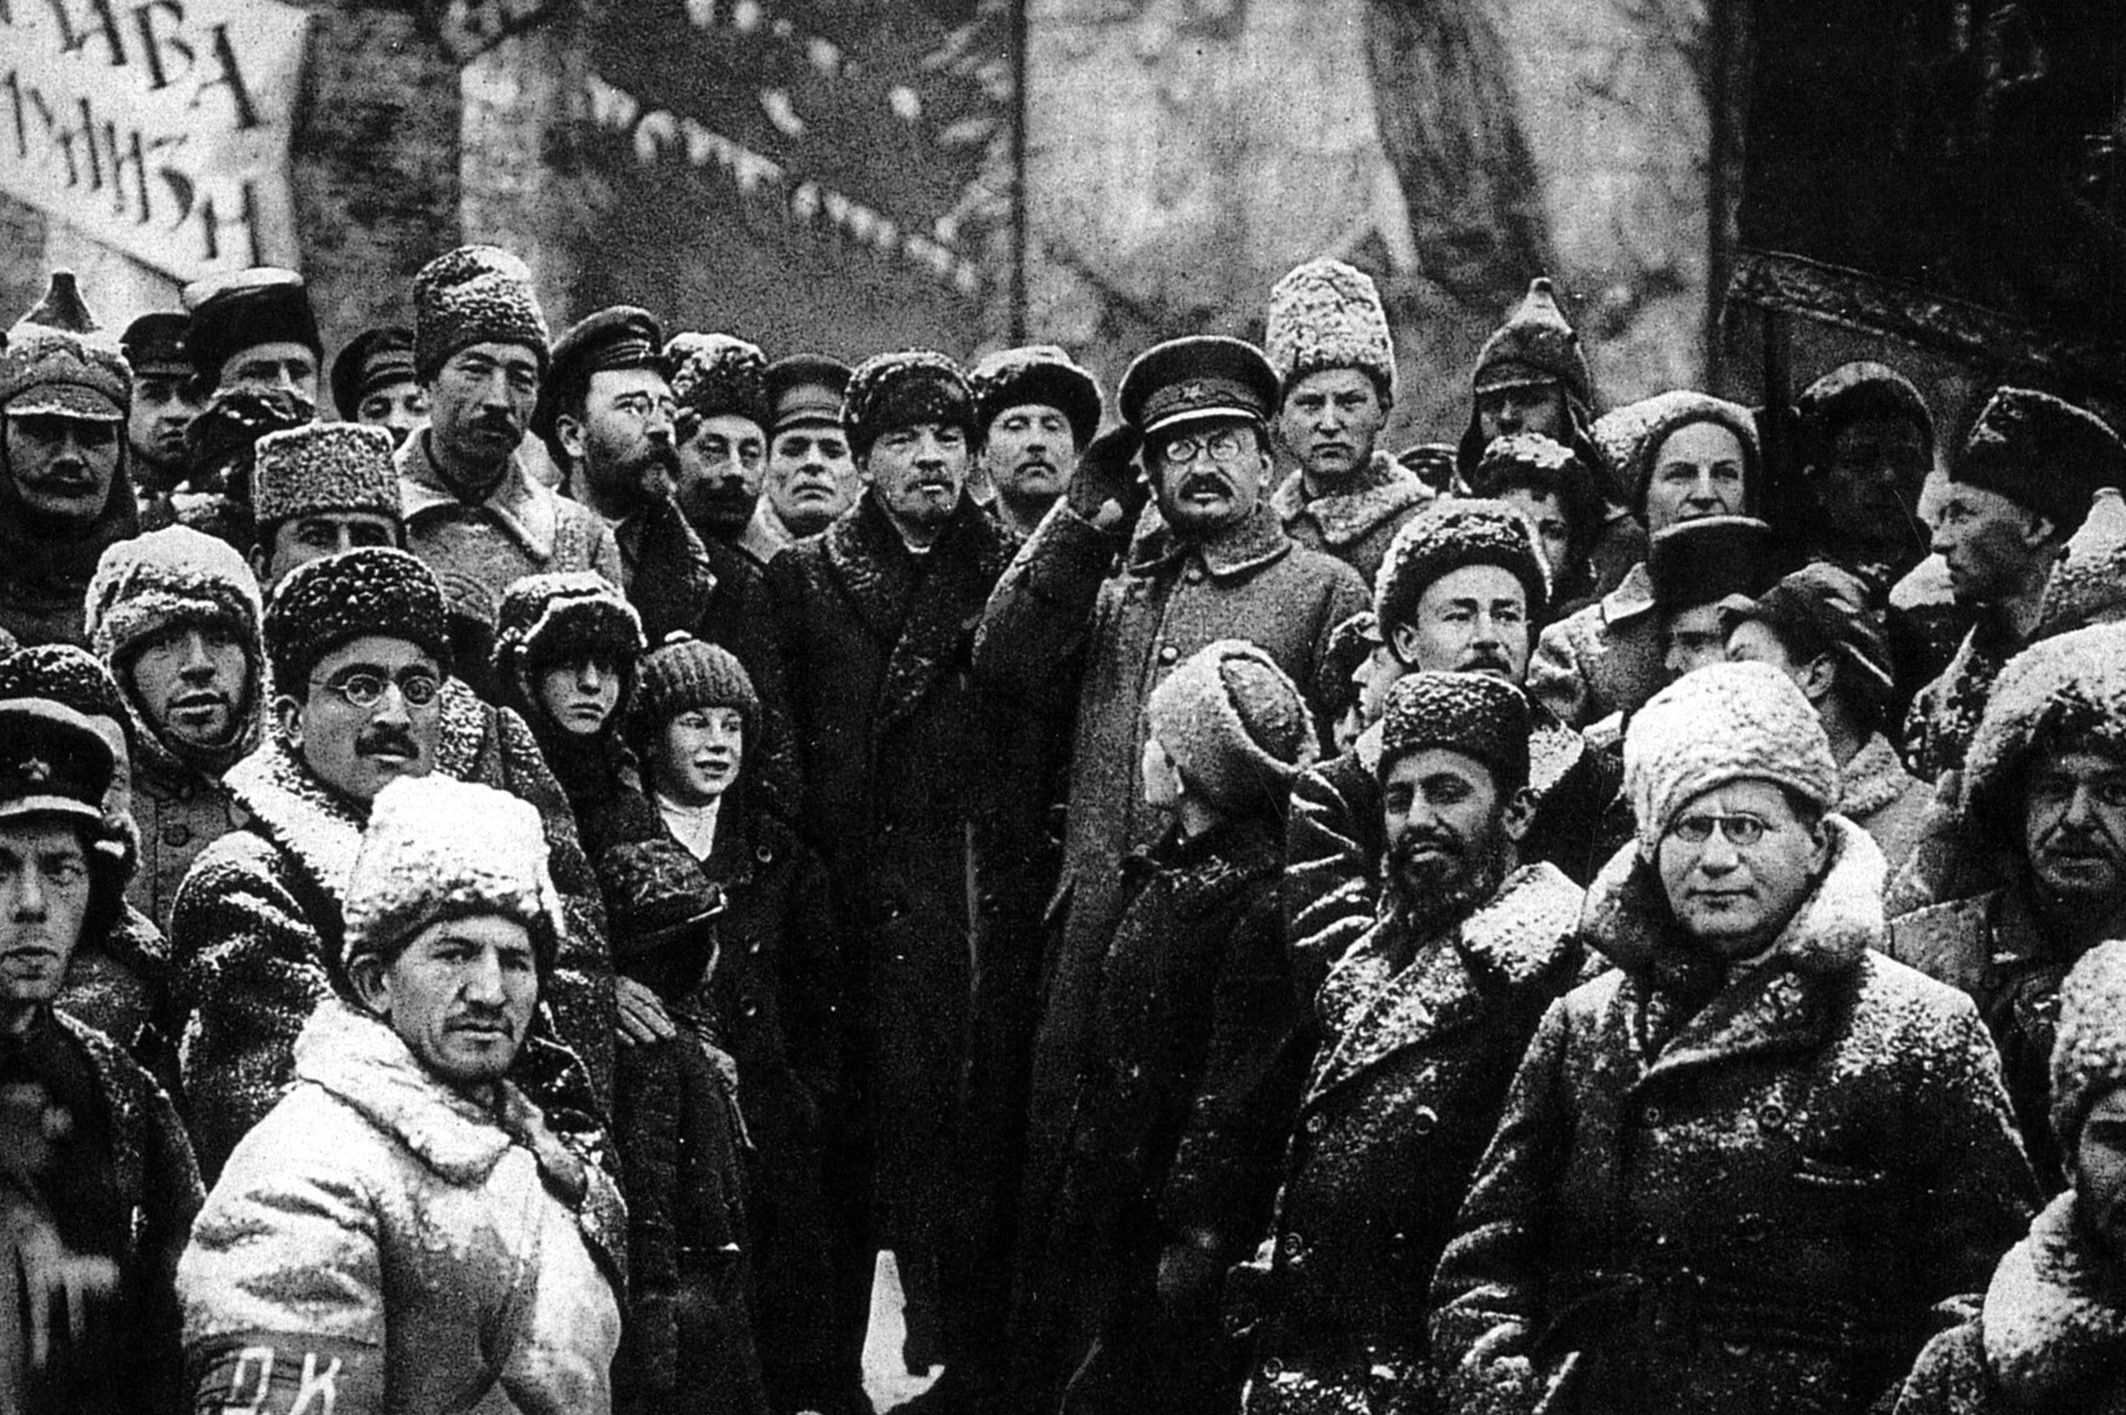 Lenin and Trotsky Image public domain